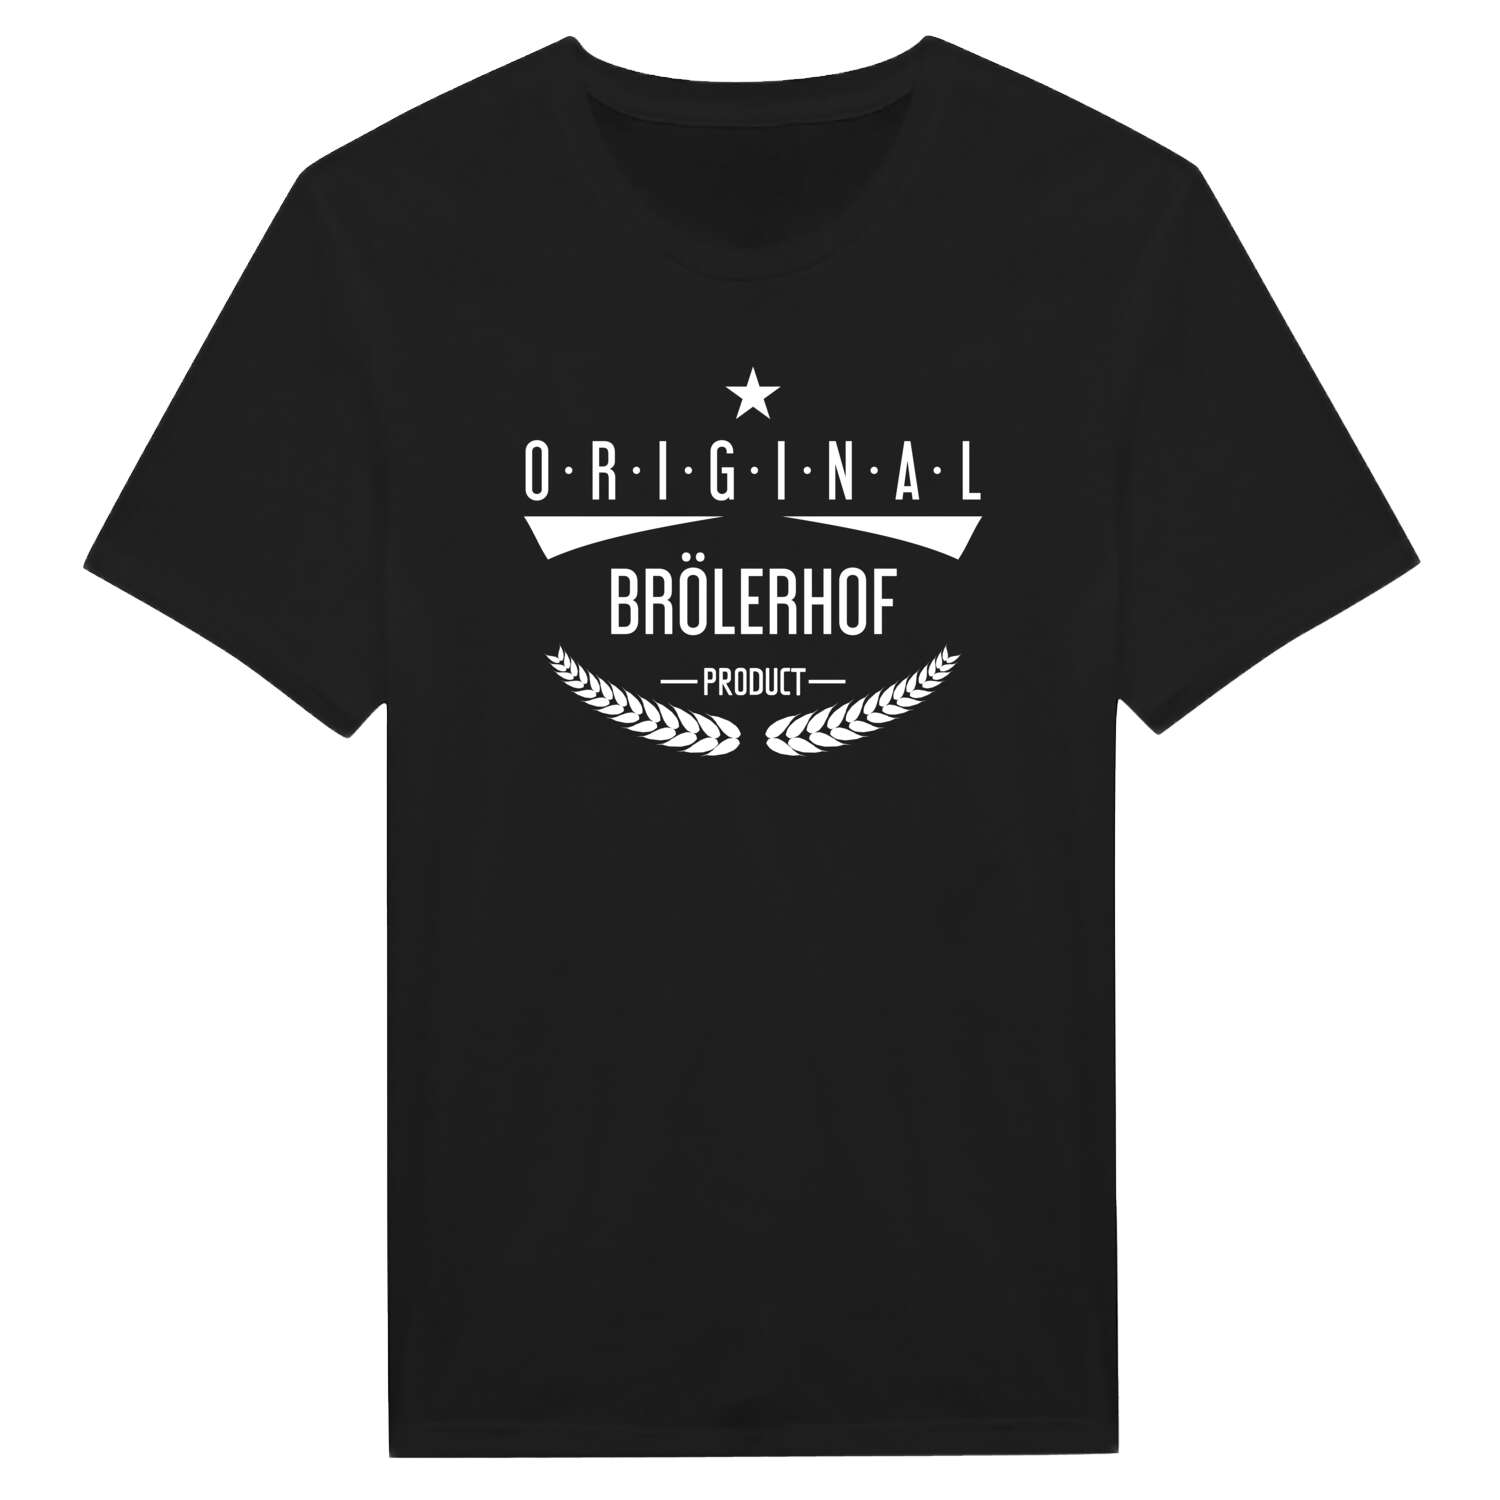 Brölerhof T-Shirt »Original Product«